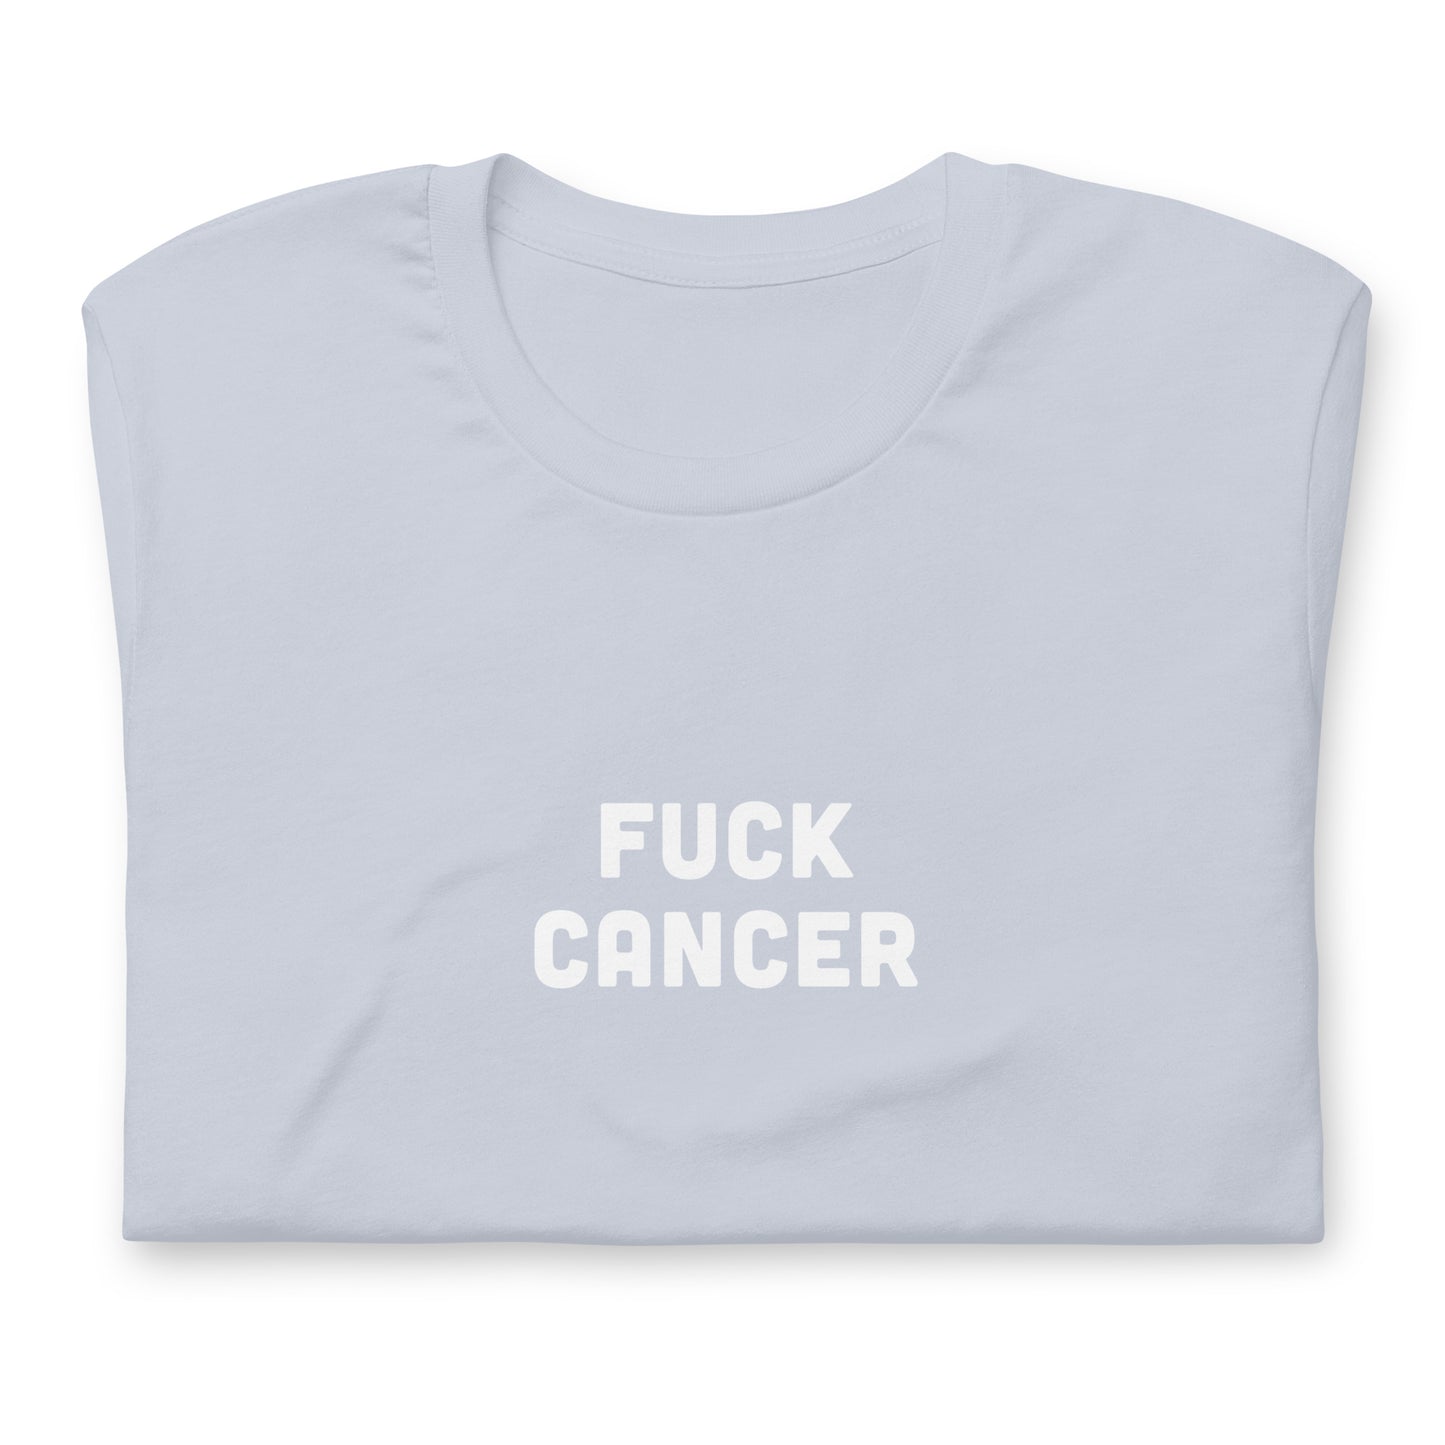 Fuck Cancer T-Shirt Size M Color Asphalt